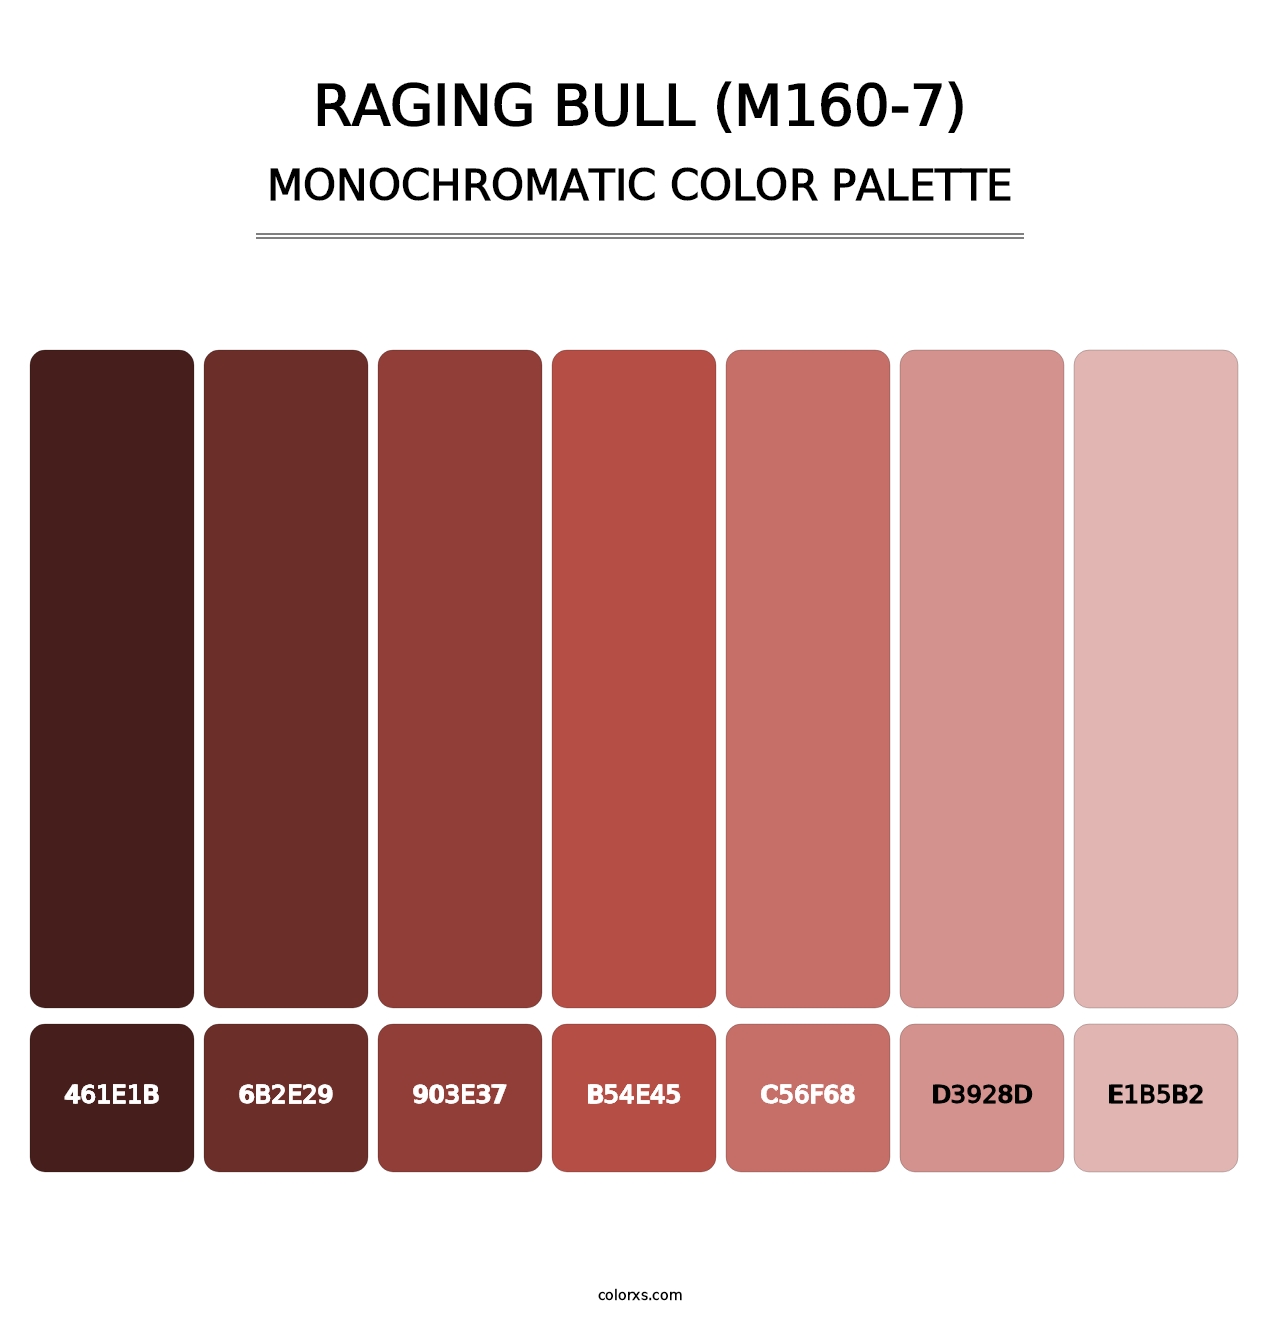 Raging Bull (M160-7) - Monochromatic Color Palette